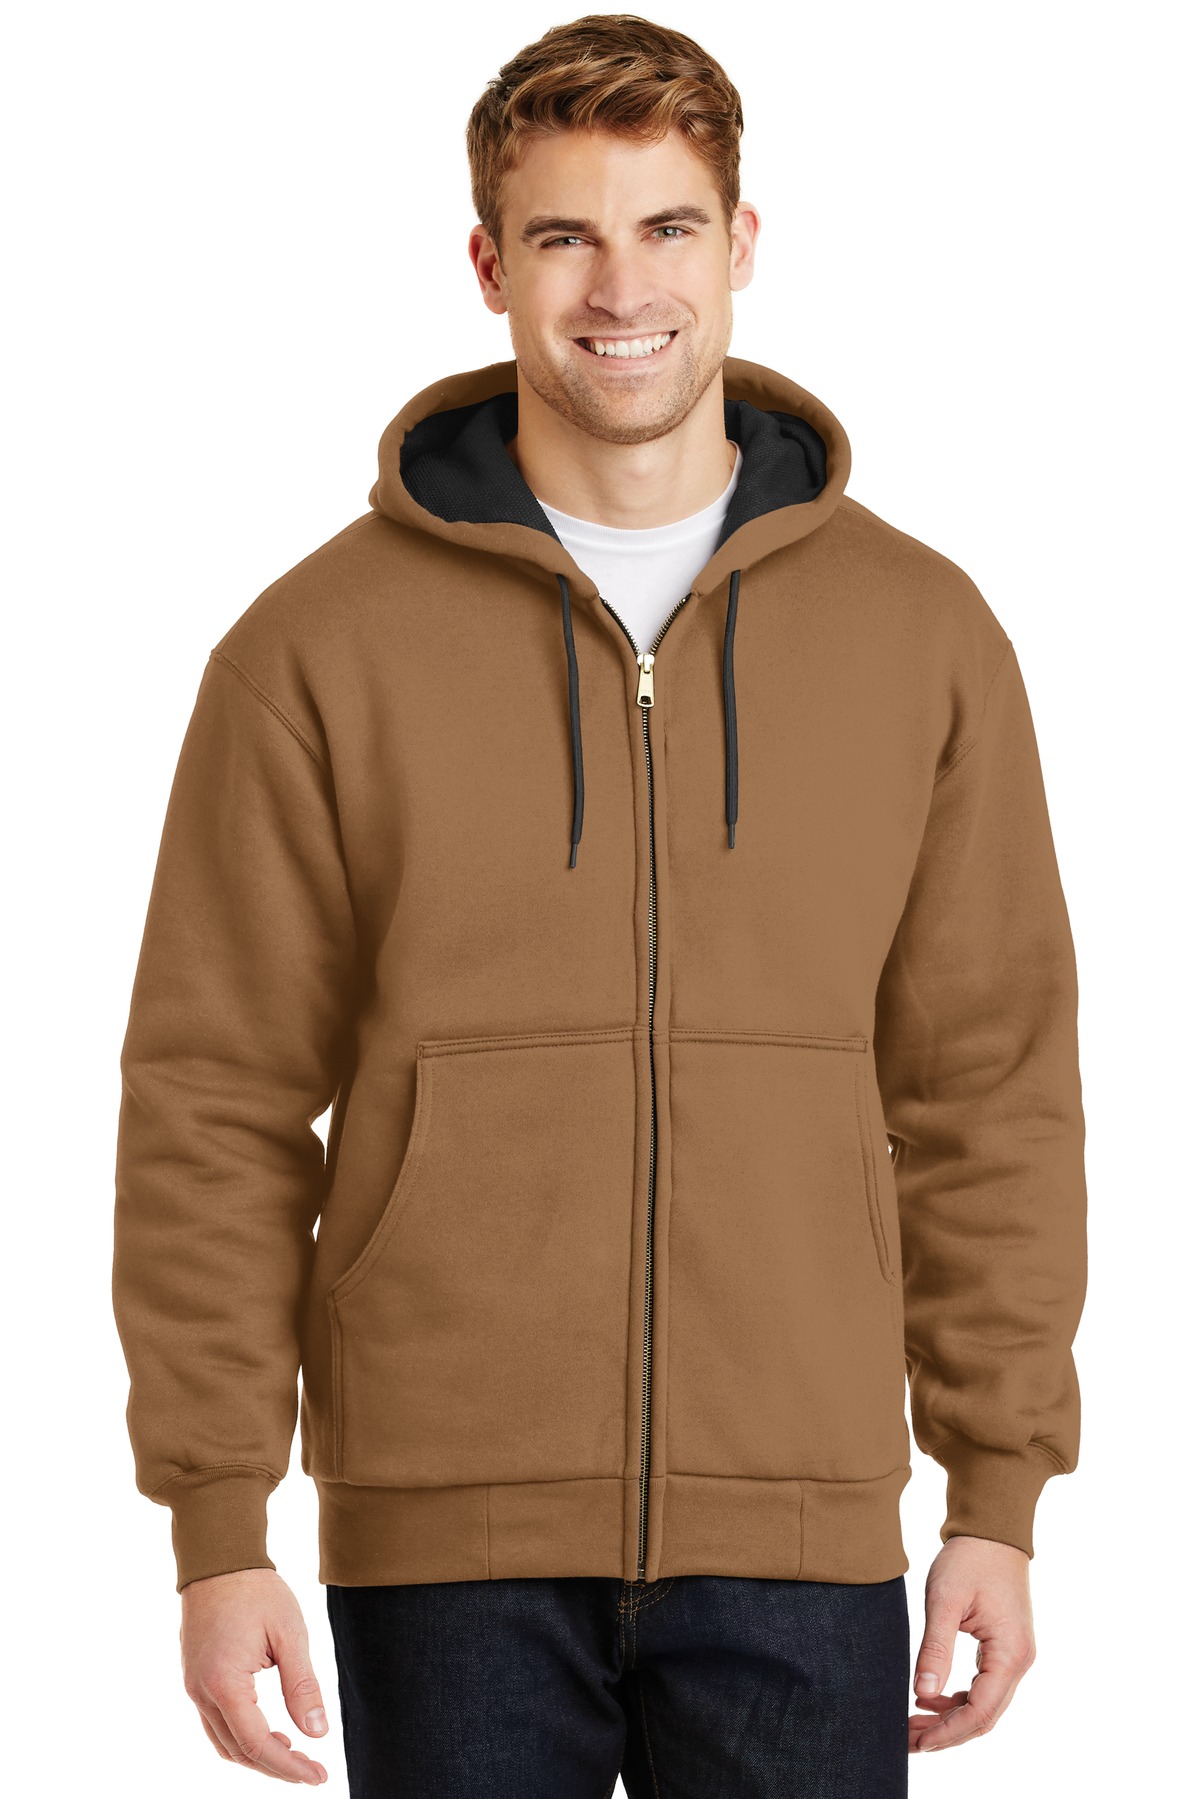 CornerStone - Heavyweight Full-Zip Hooded Sweatshirt with Thermal Lining-